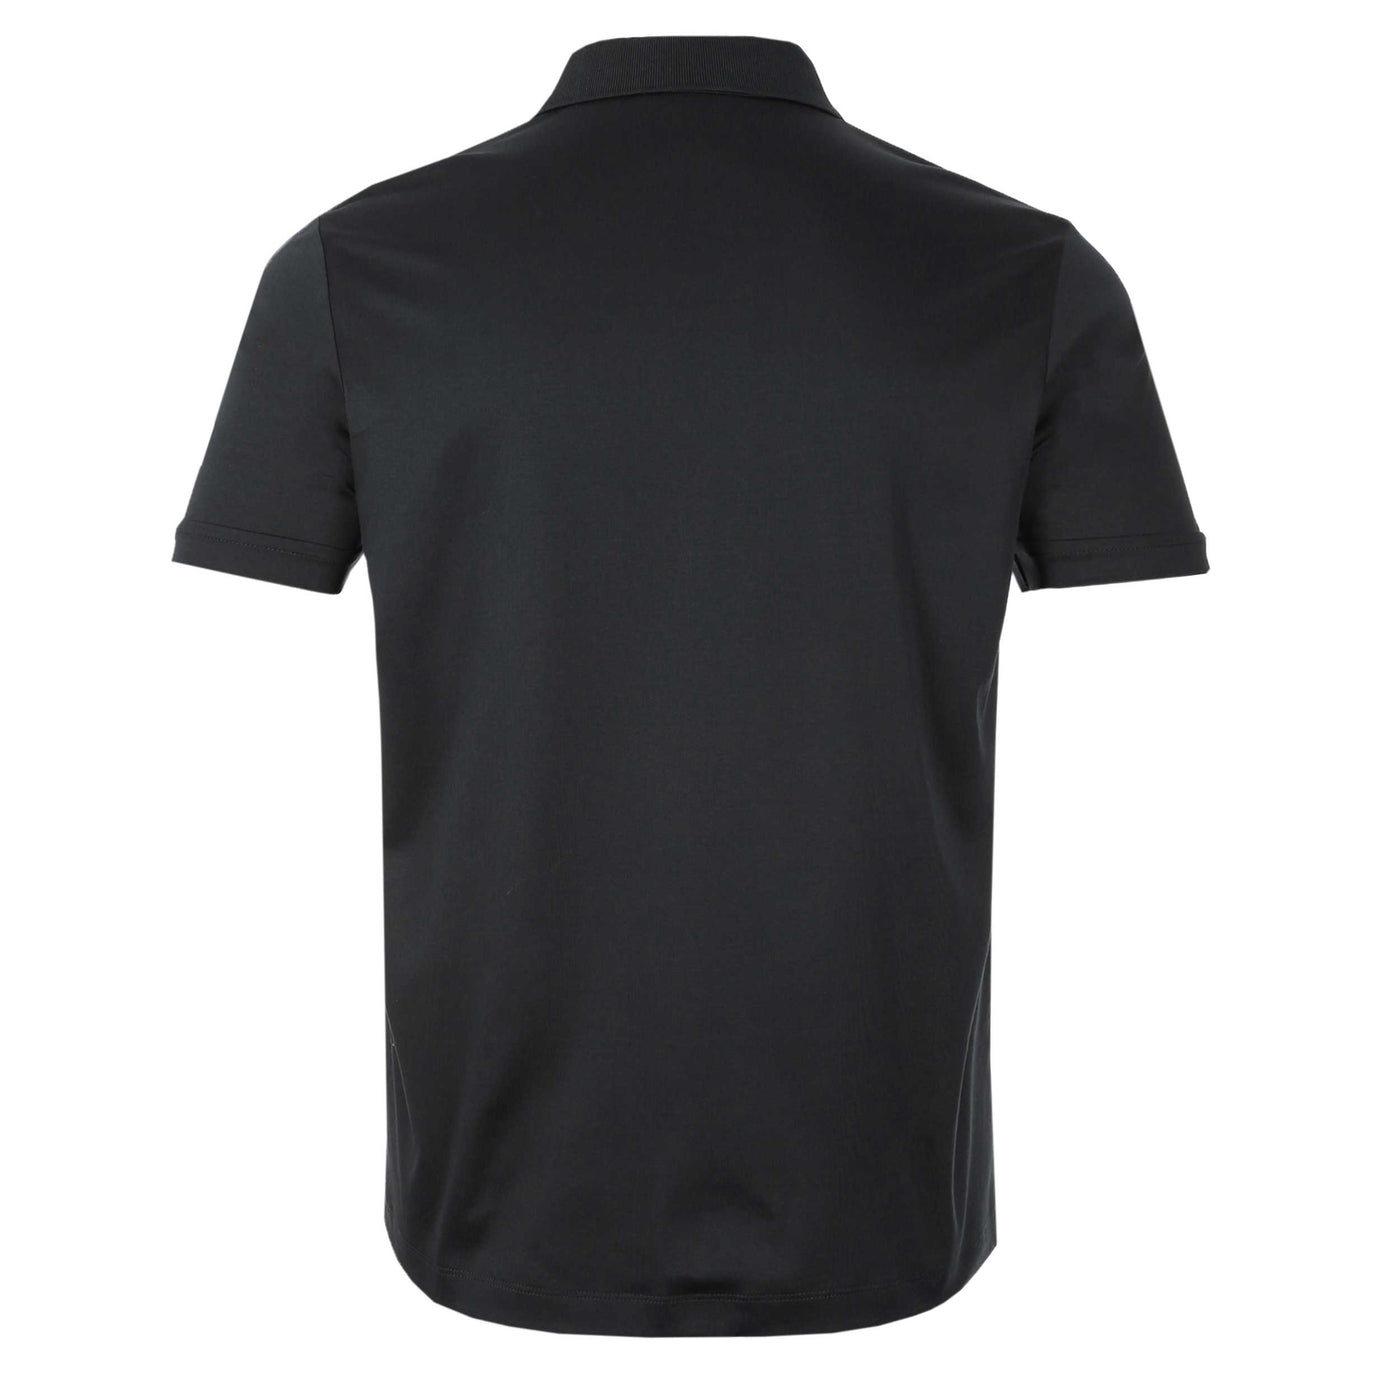 Sandbanks Interlock Full button Polo Shirt in Black Back